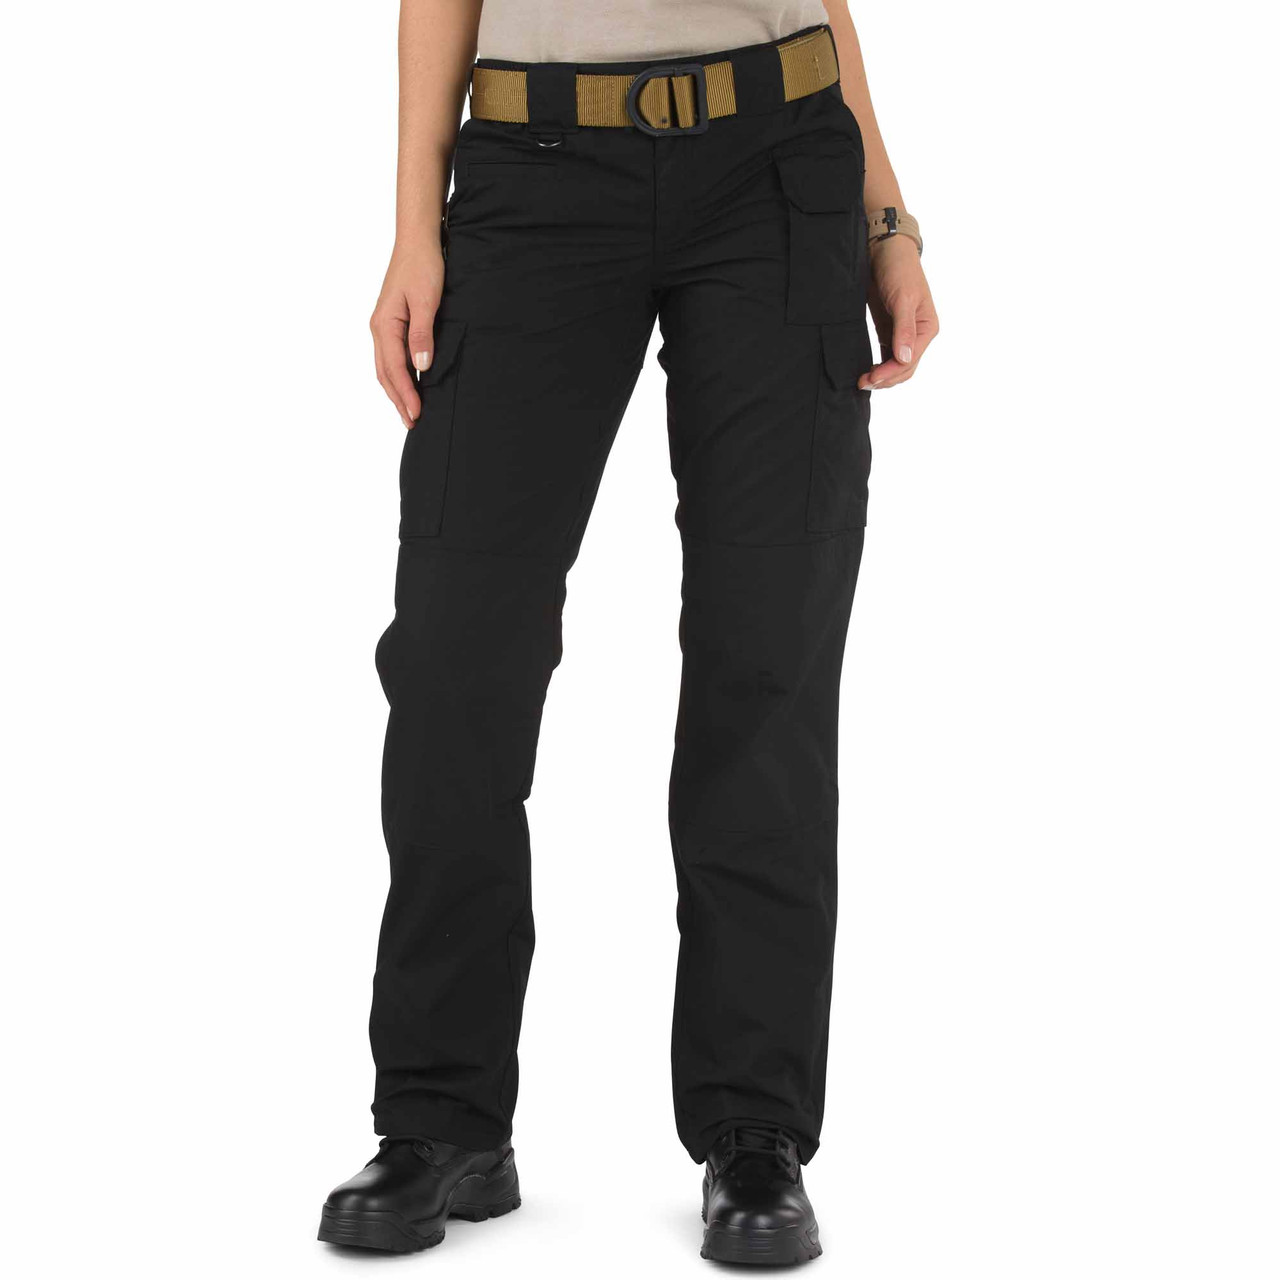 511 Tactical Women's Taclite Pro Ripstop Pant